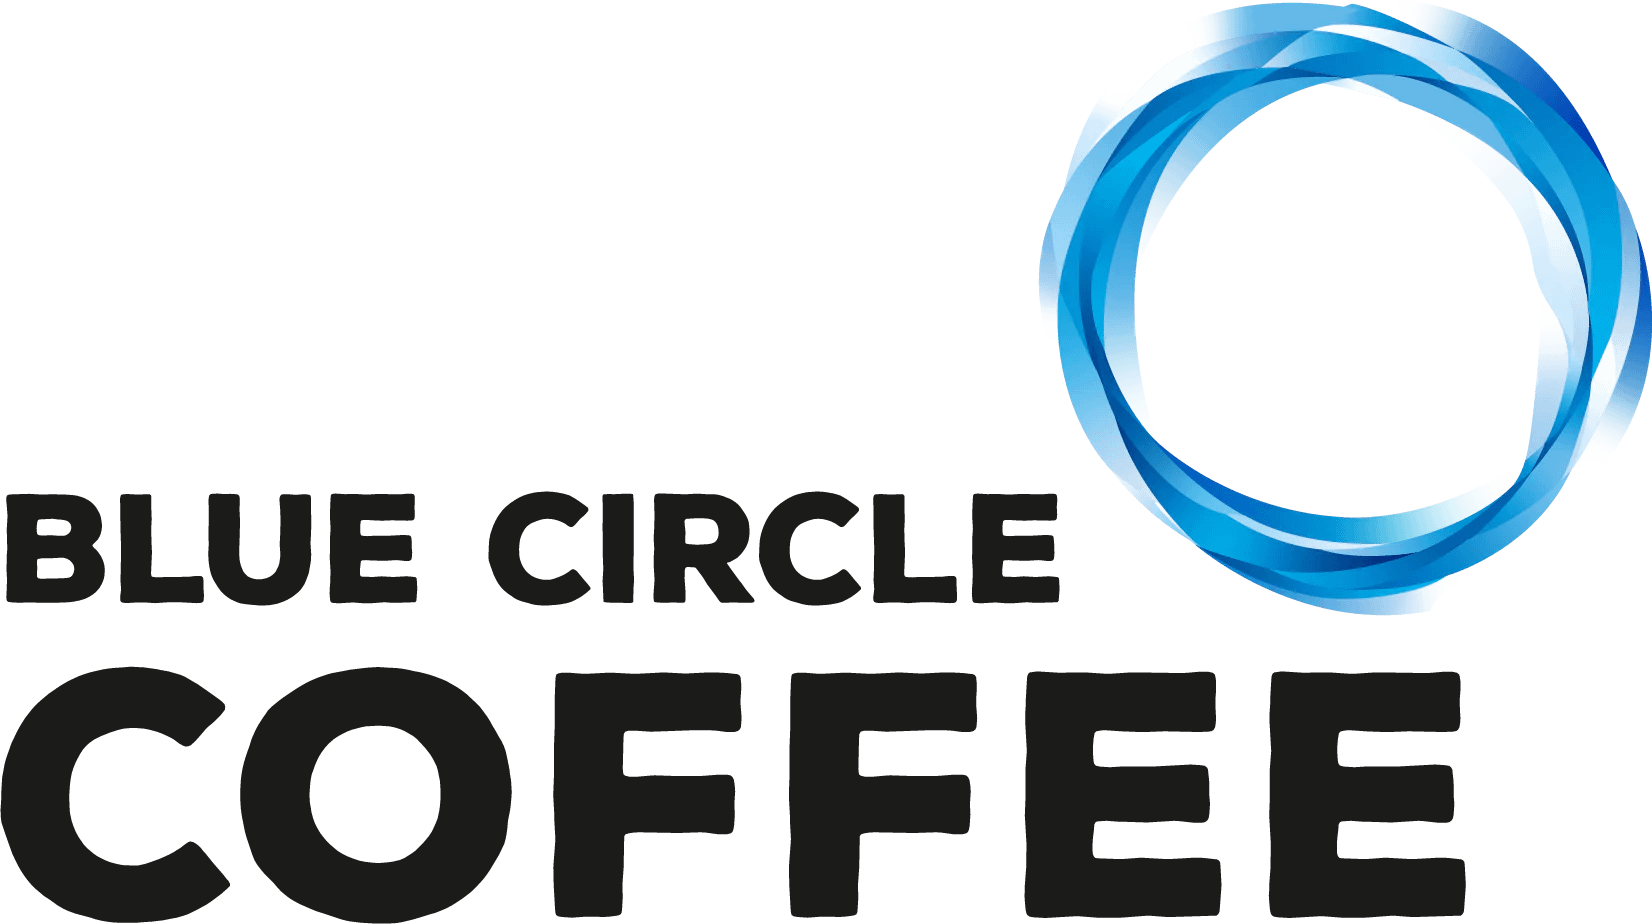 Blue Circle Coffee